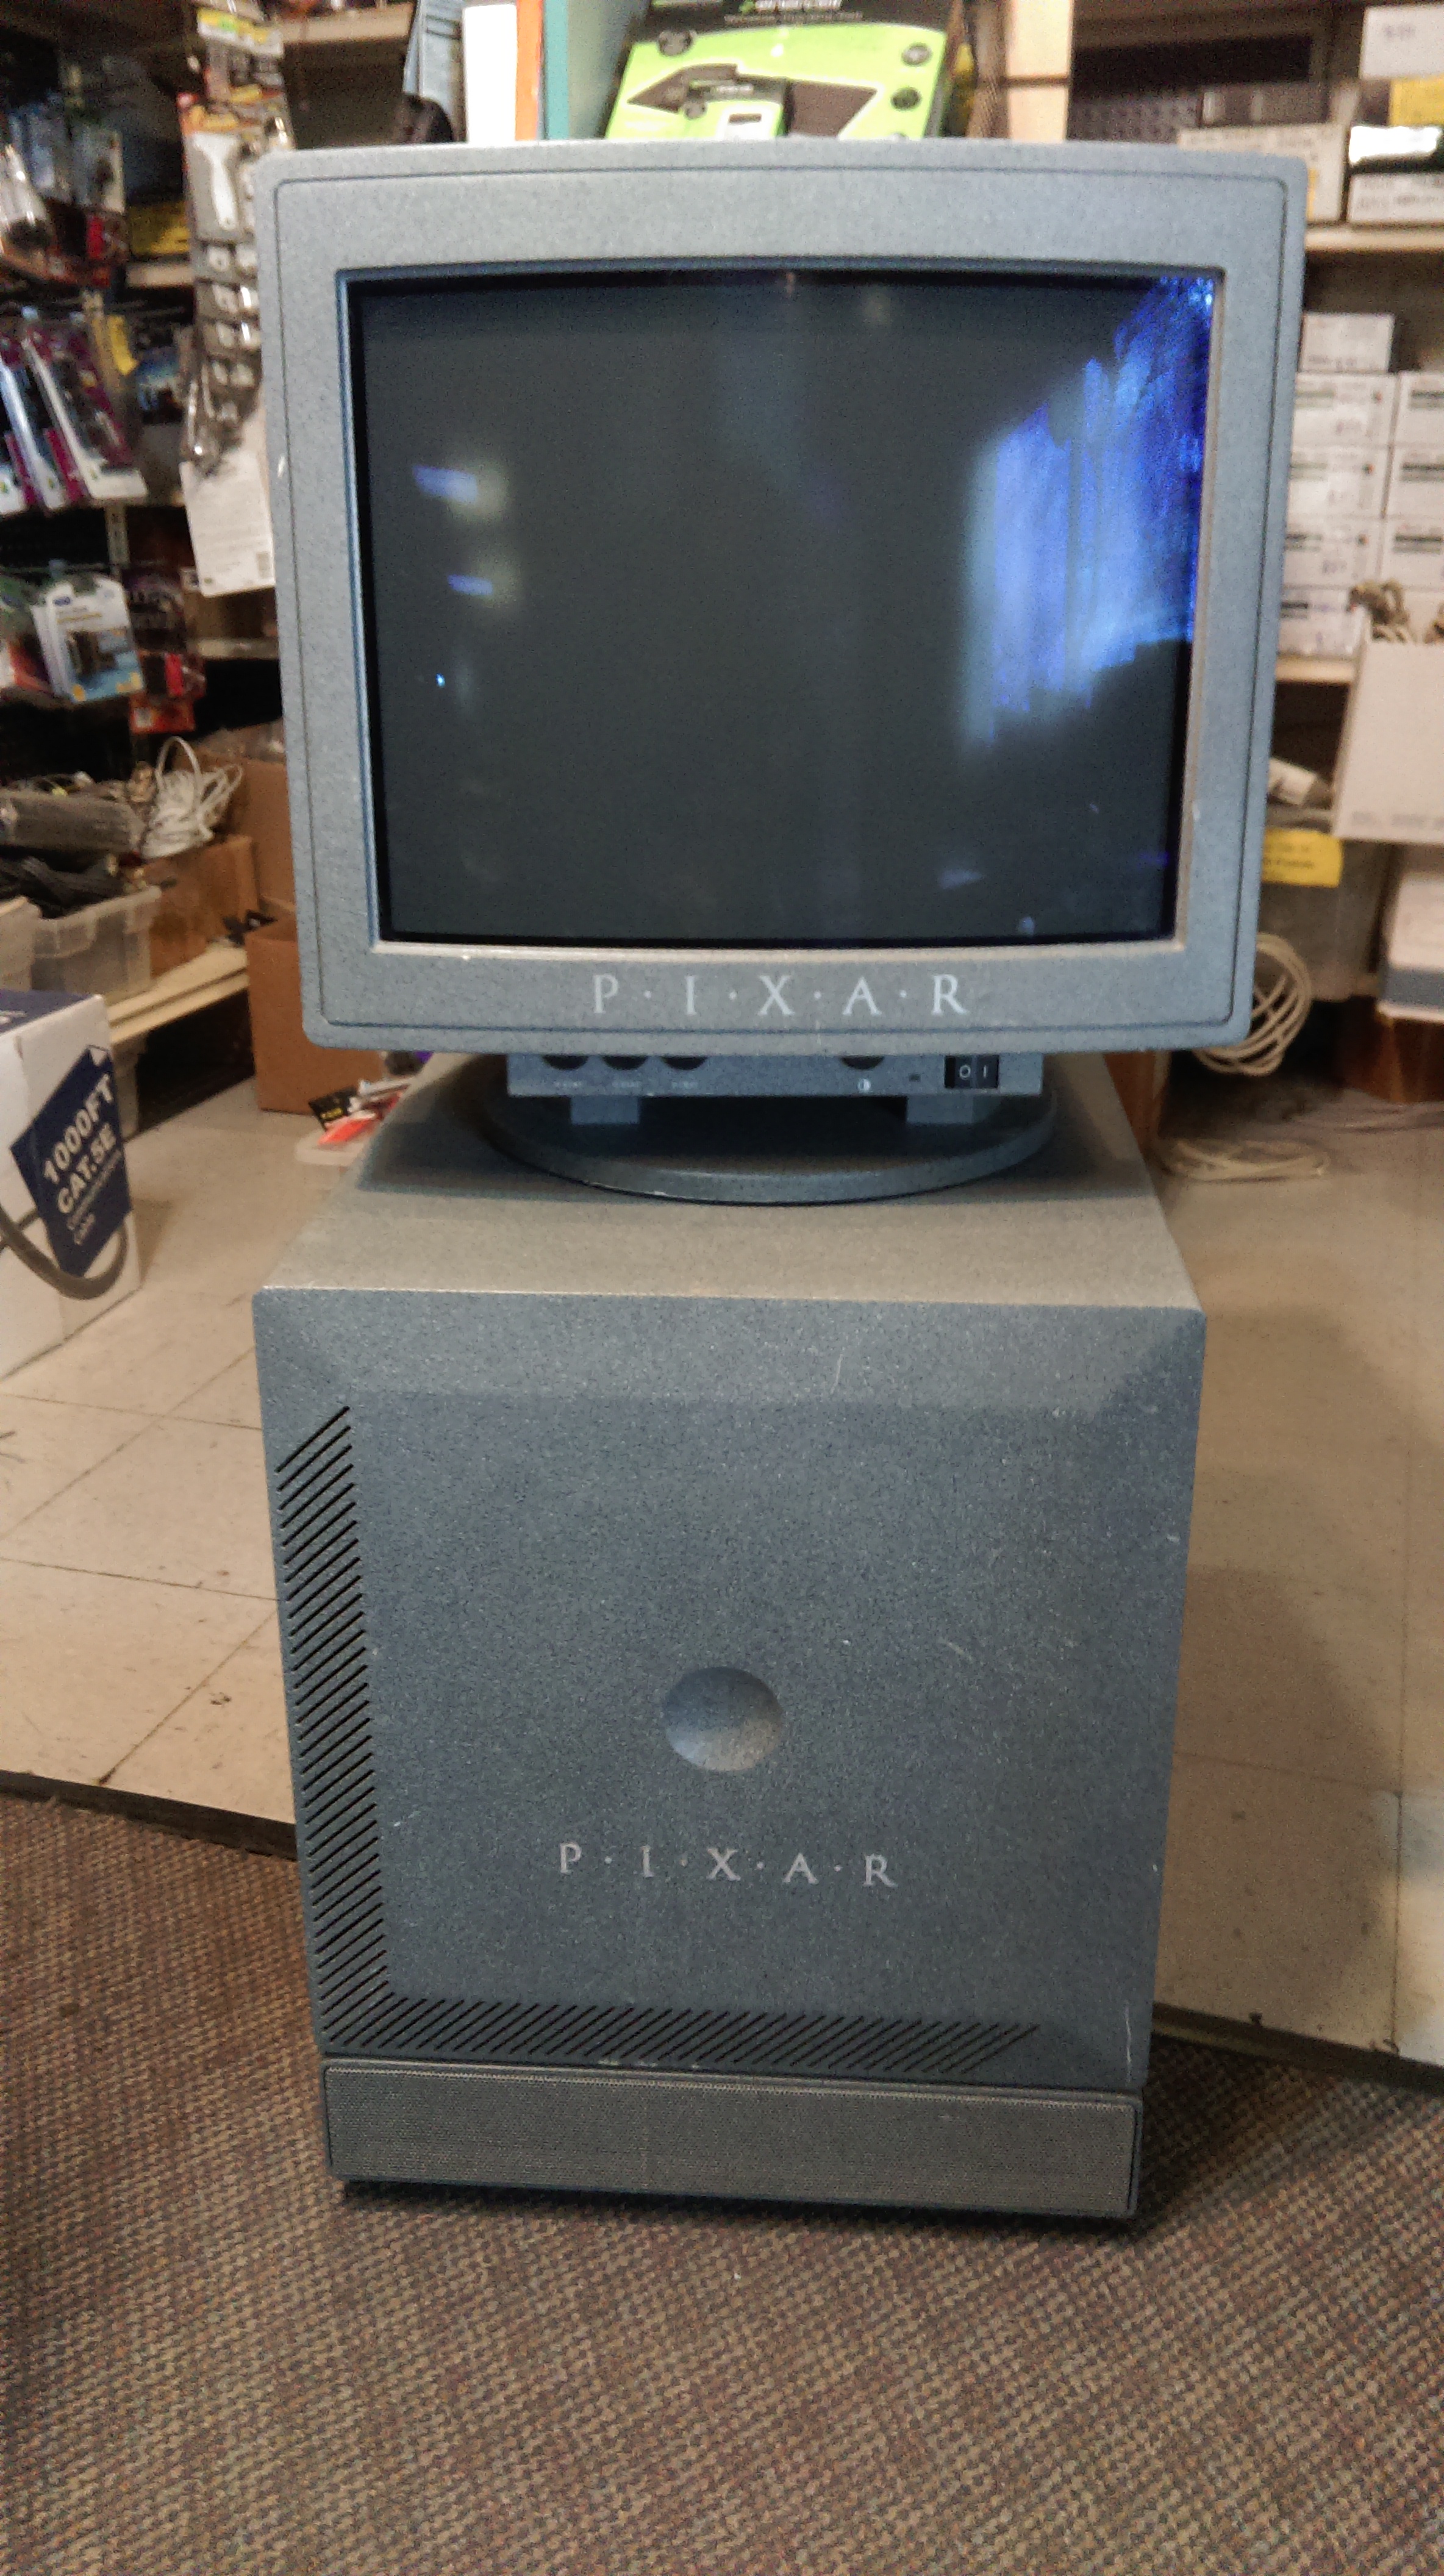 Pixar Computer Image